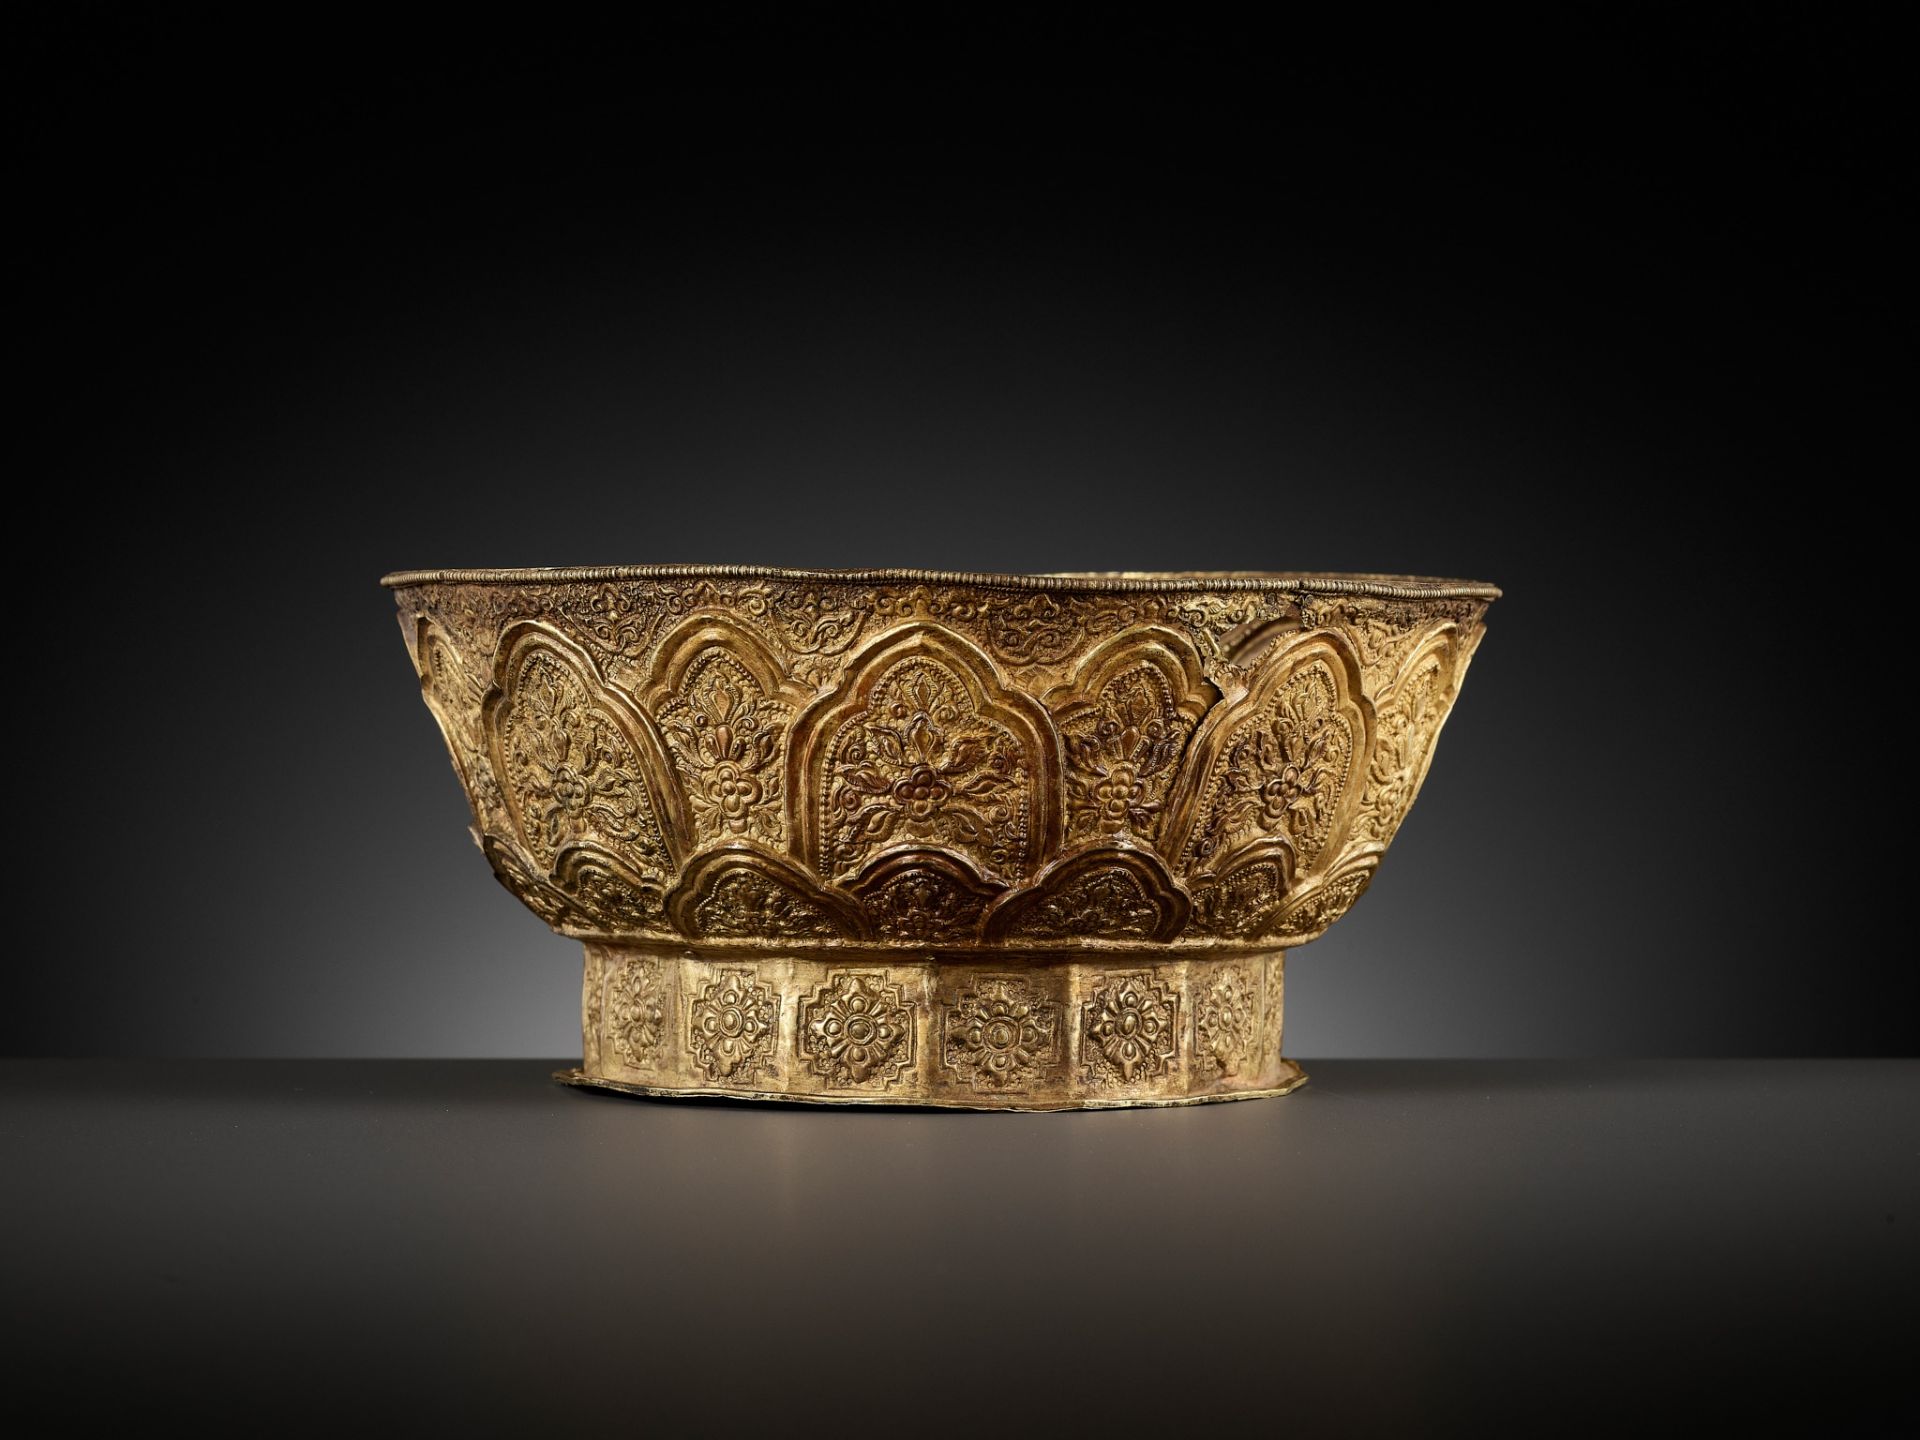 A SILVER-INLAID GOLD REPOUSSÉ BOWL DEPICTING GARUDA, VIETNAM,FORMER KINGDOMS OF CHAMPA,CIRCA 10TH C. - Image 13 of 18